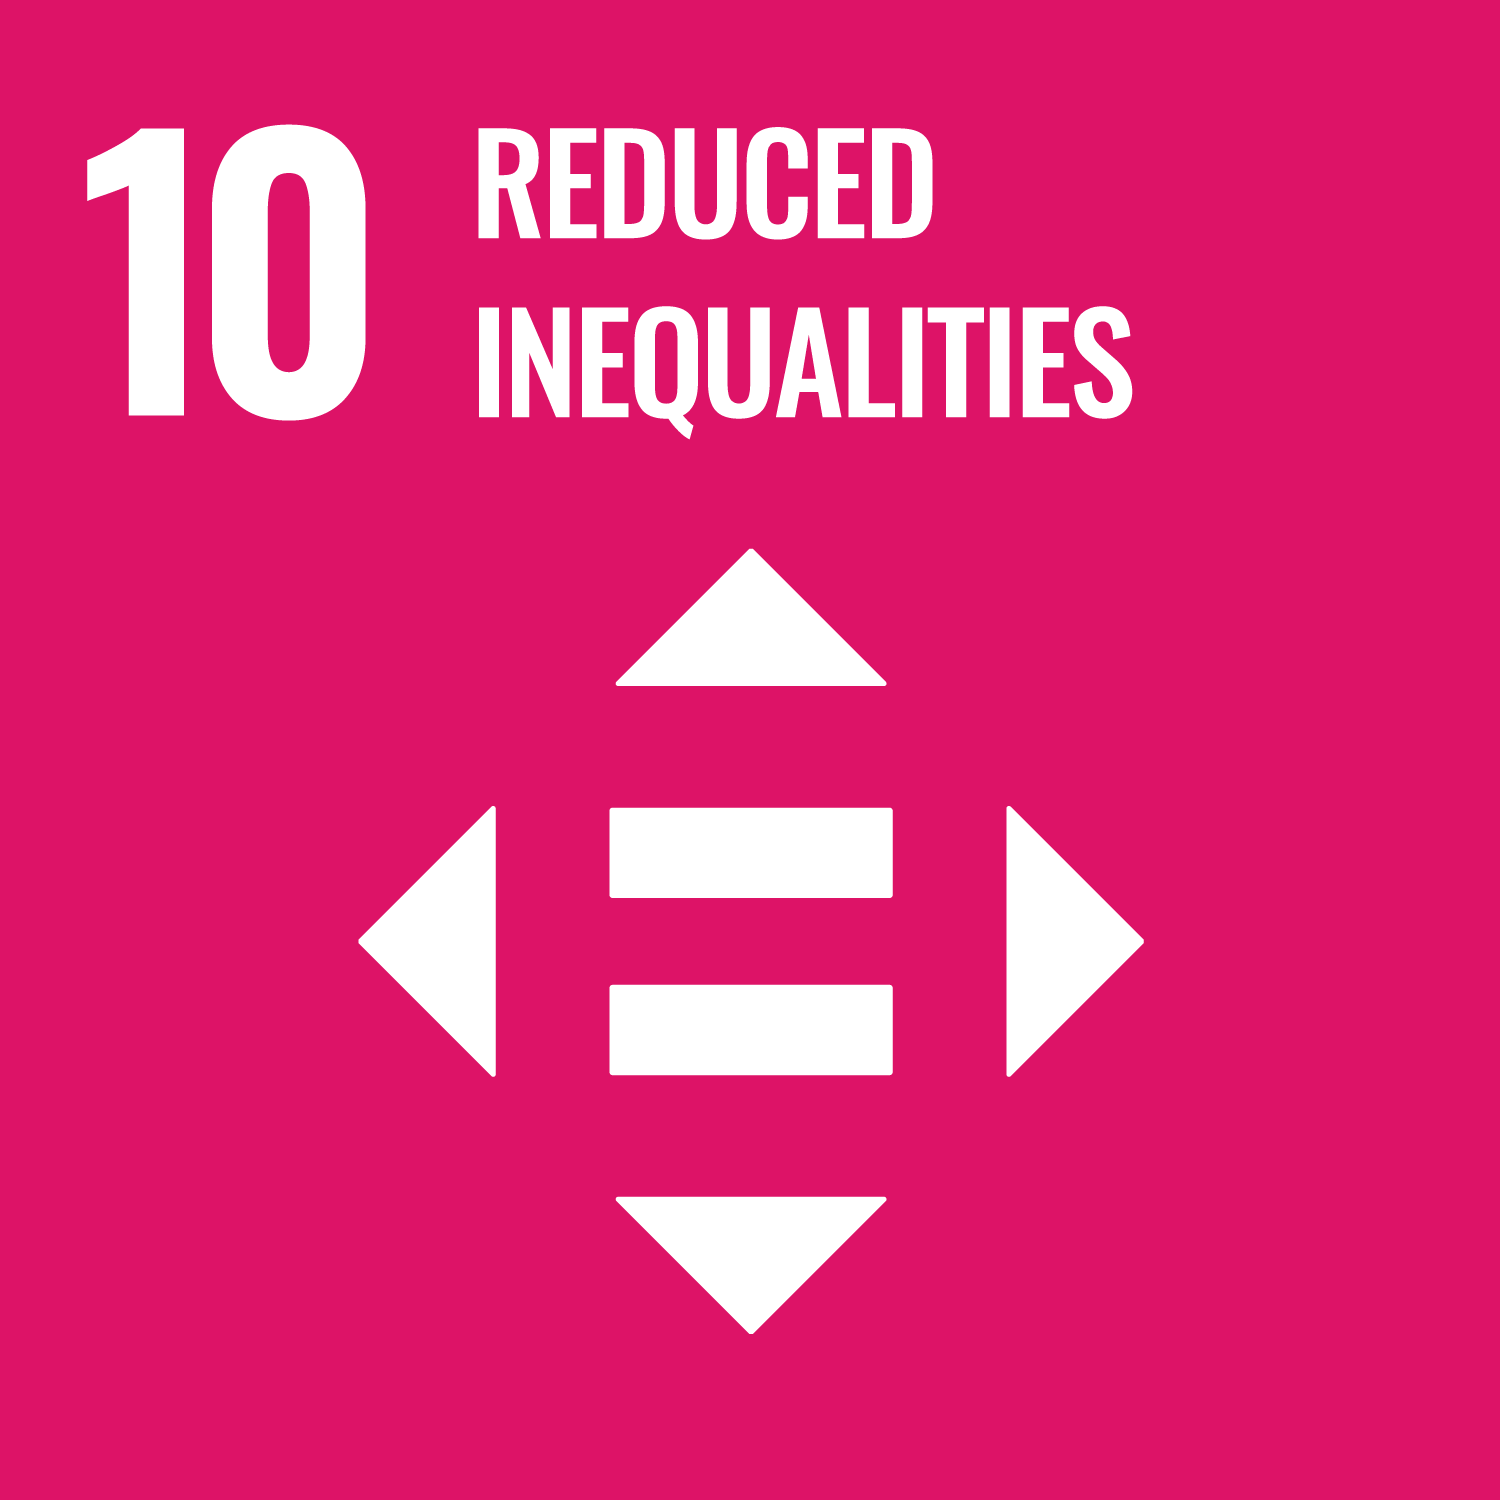 SDG Reduced inequalities